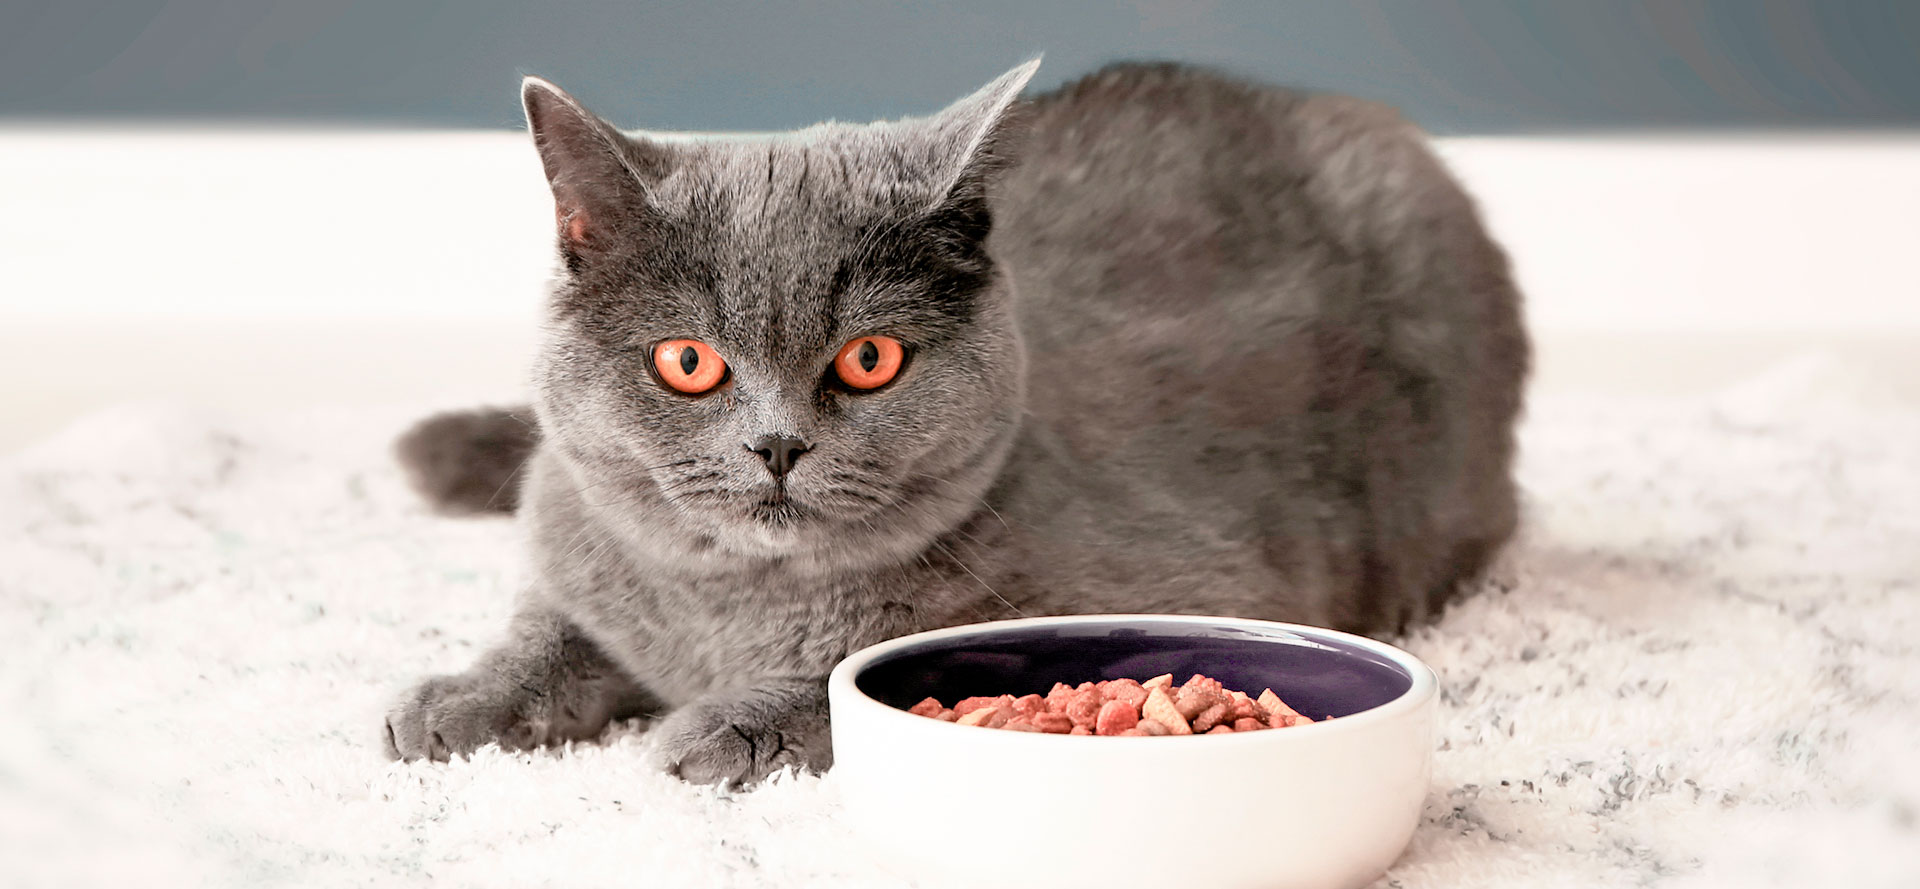 Grey cat and grain-free cat food in a bowl.